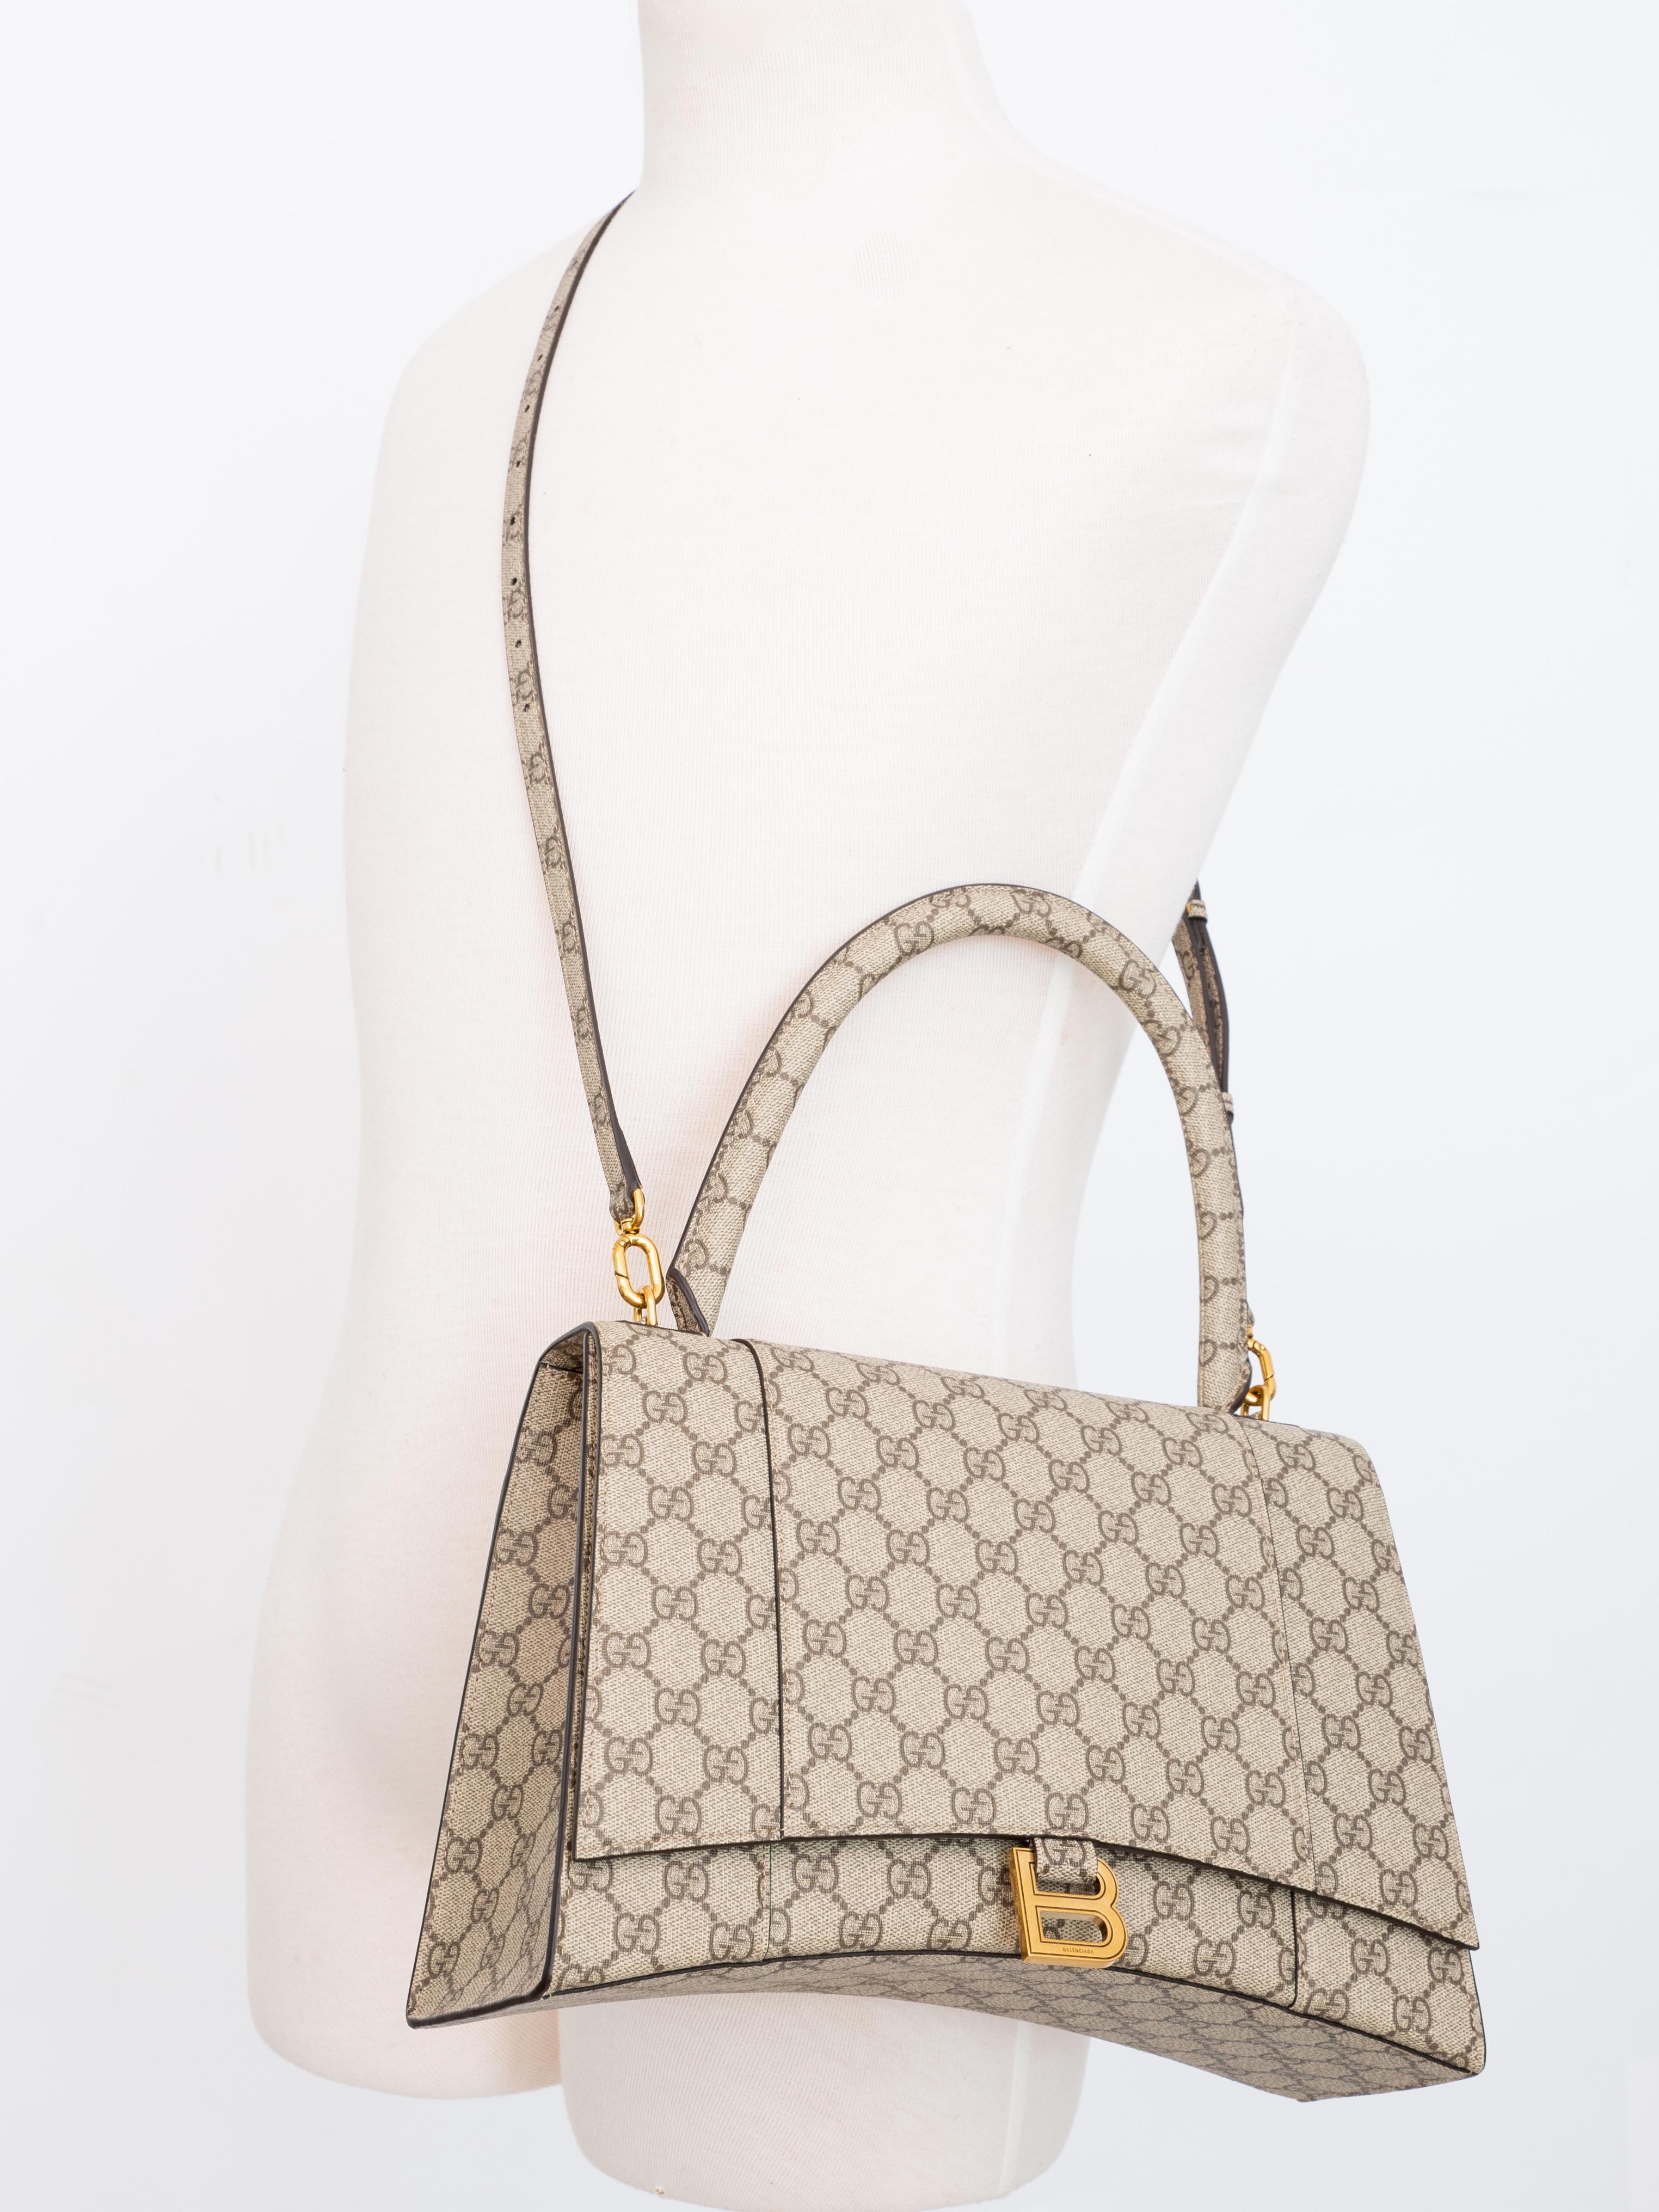 Gucci x Balenciaga The Hacker Project Hourglass Bag Medium (681696) For Sale 2